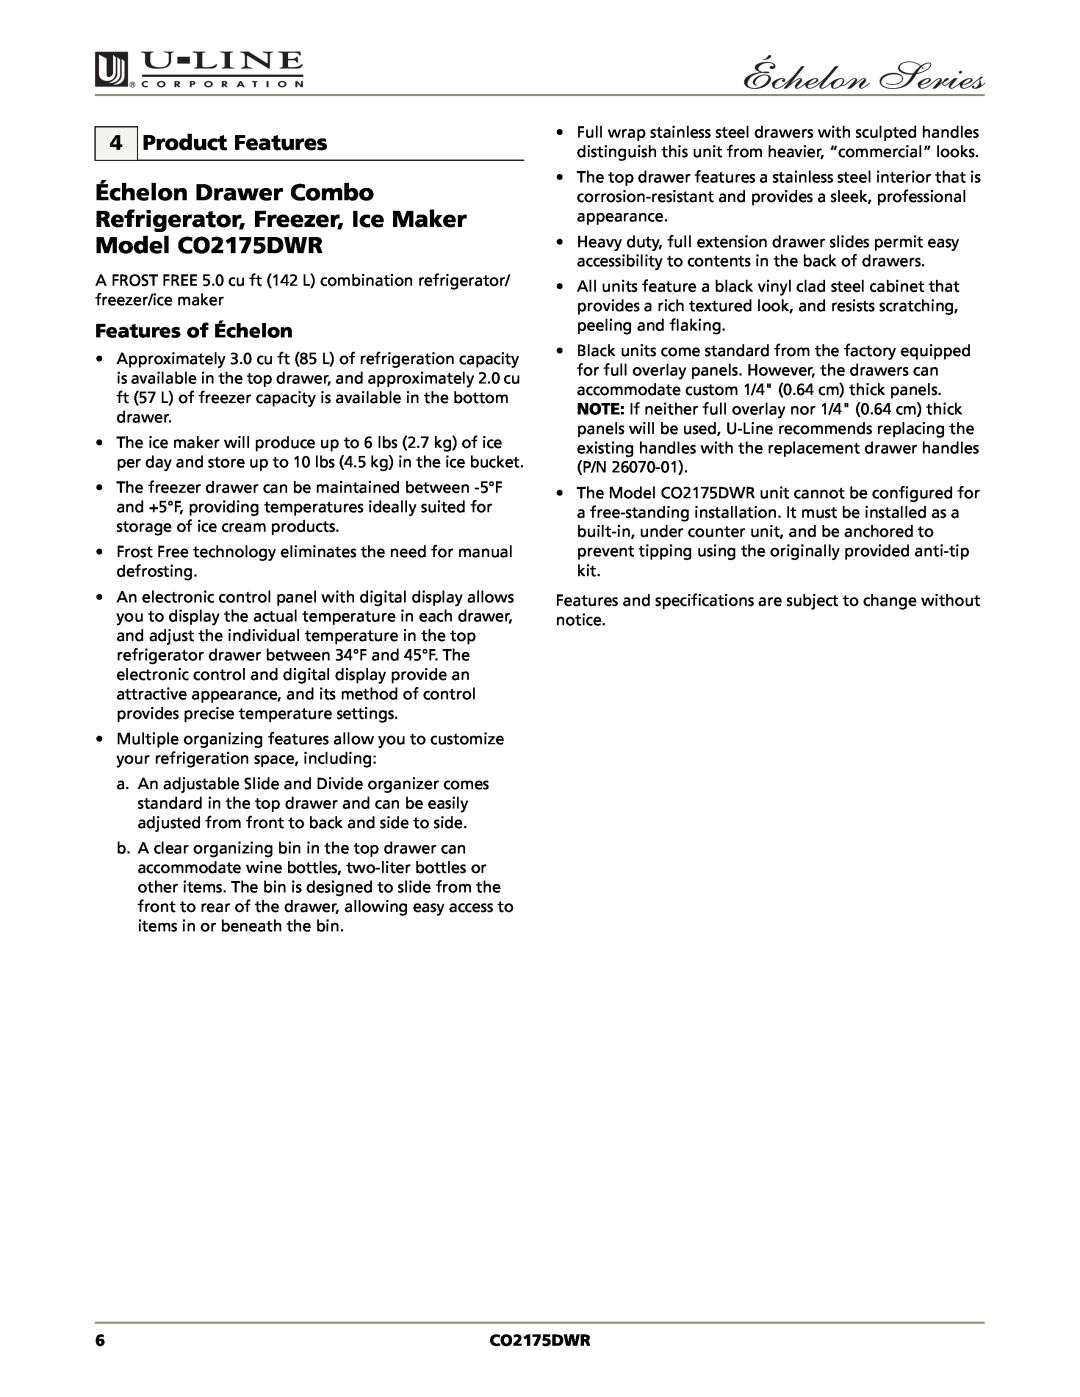 U-Line CO2175DWR manual Product Features, Features of Échelon 